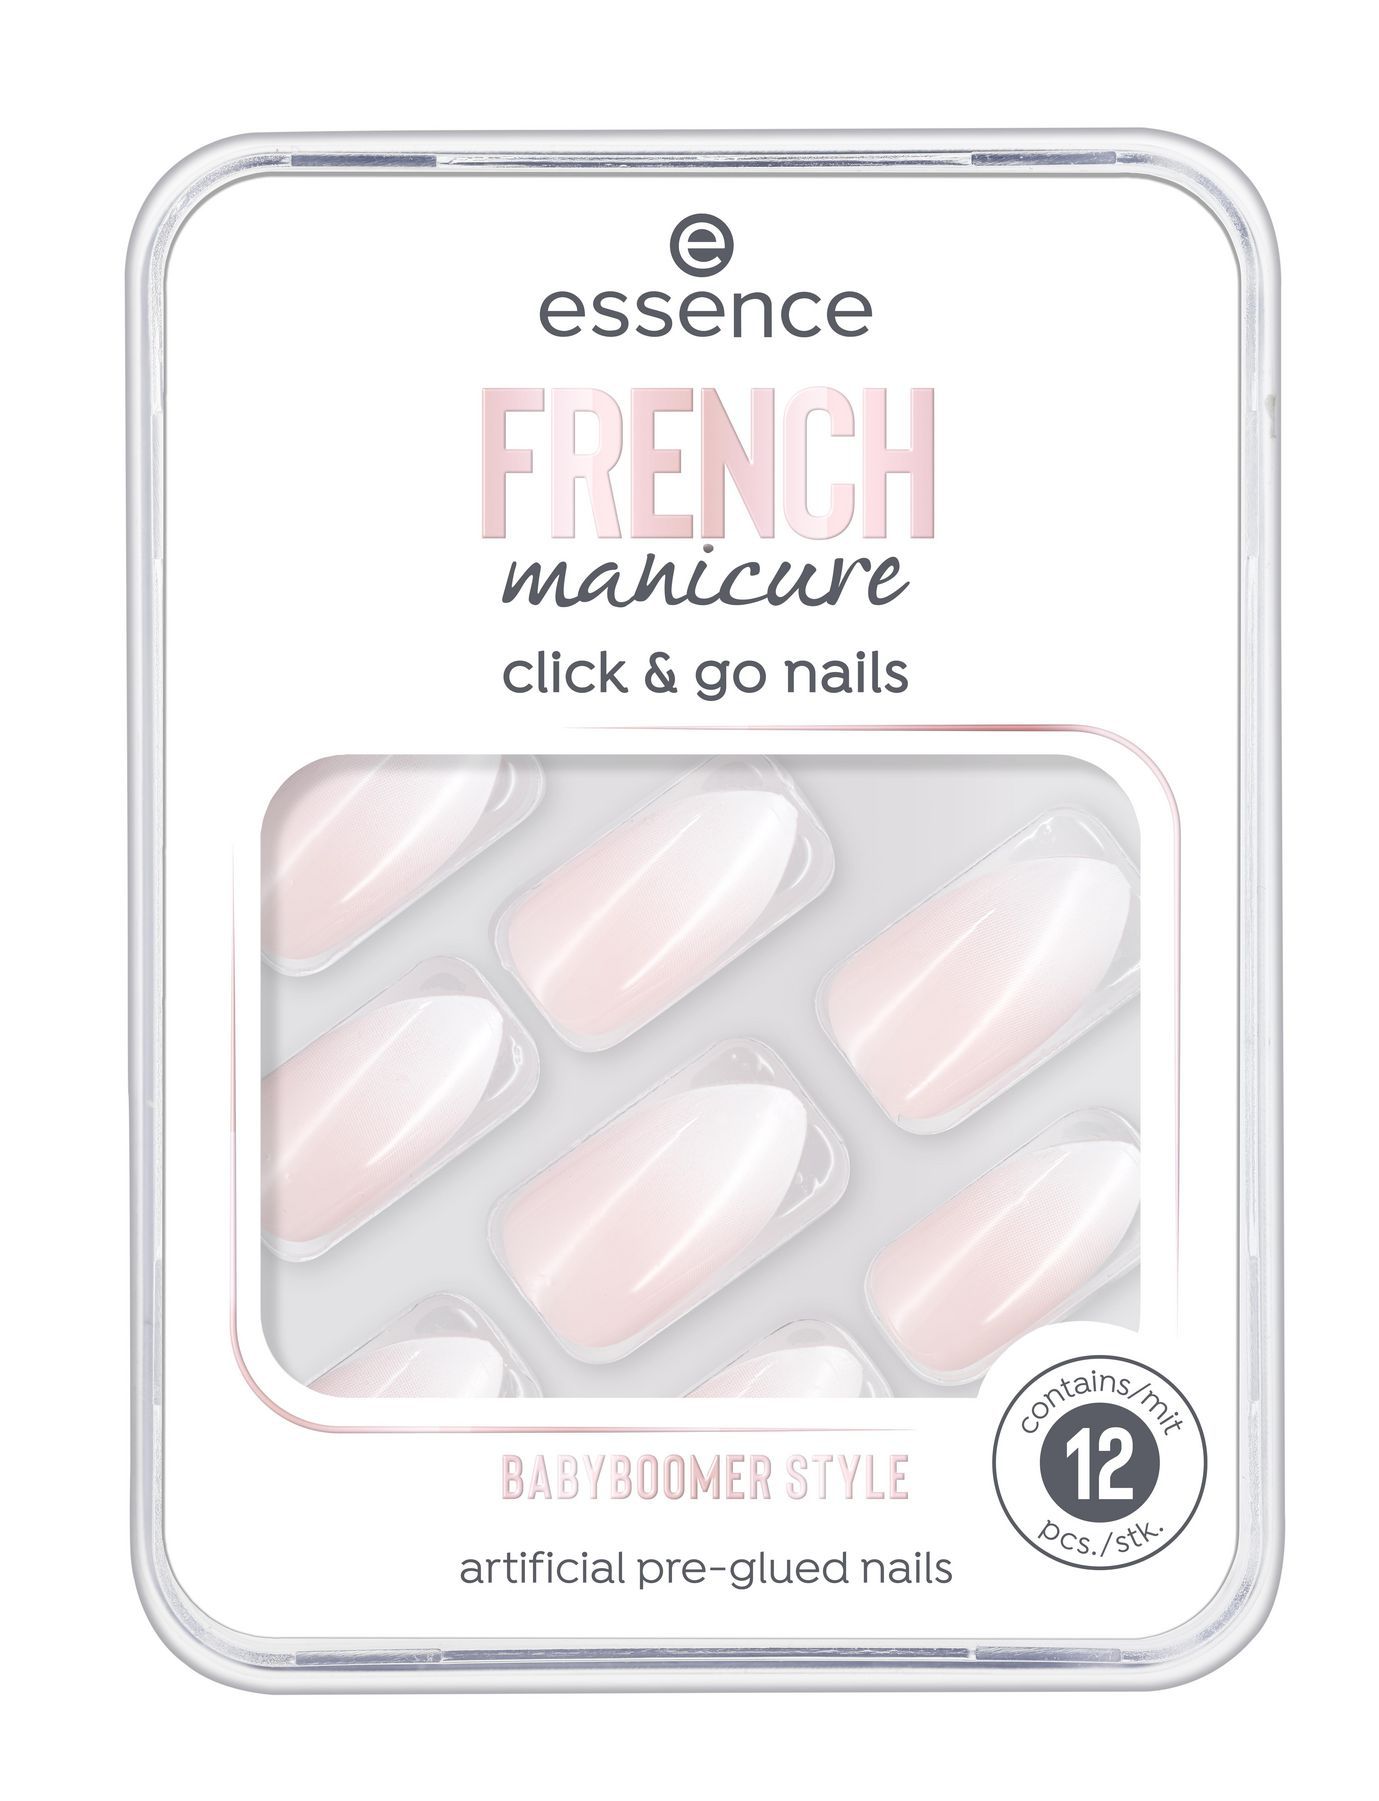 Essence FRENCH Manicure Click & Go Nails - Sztuczne paznokcie - 02 BABYBOOMER STYLE